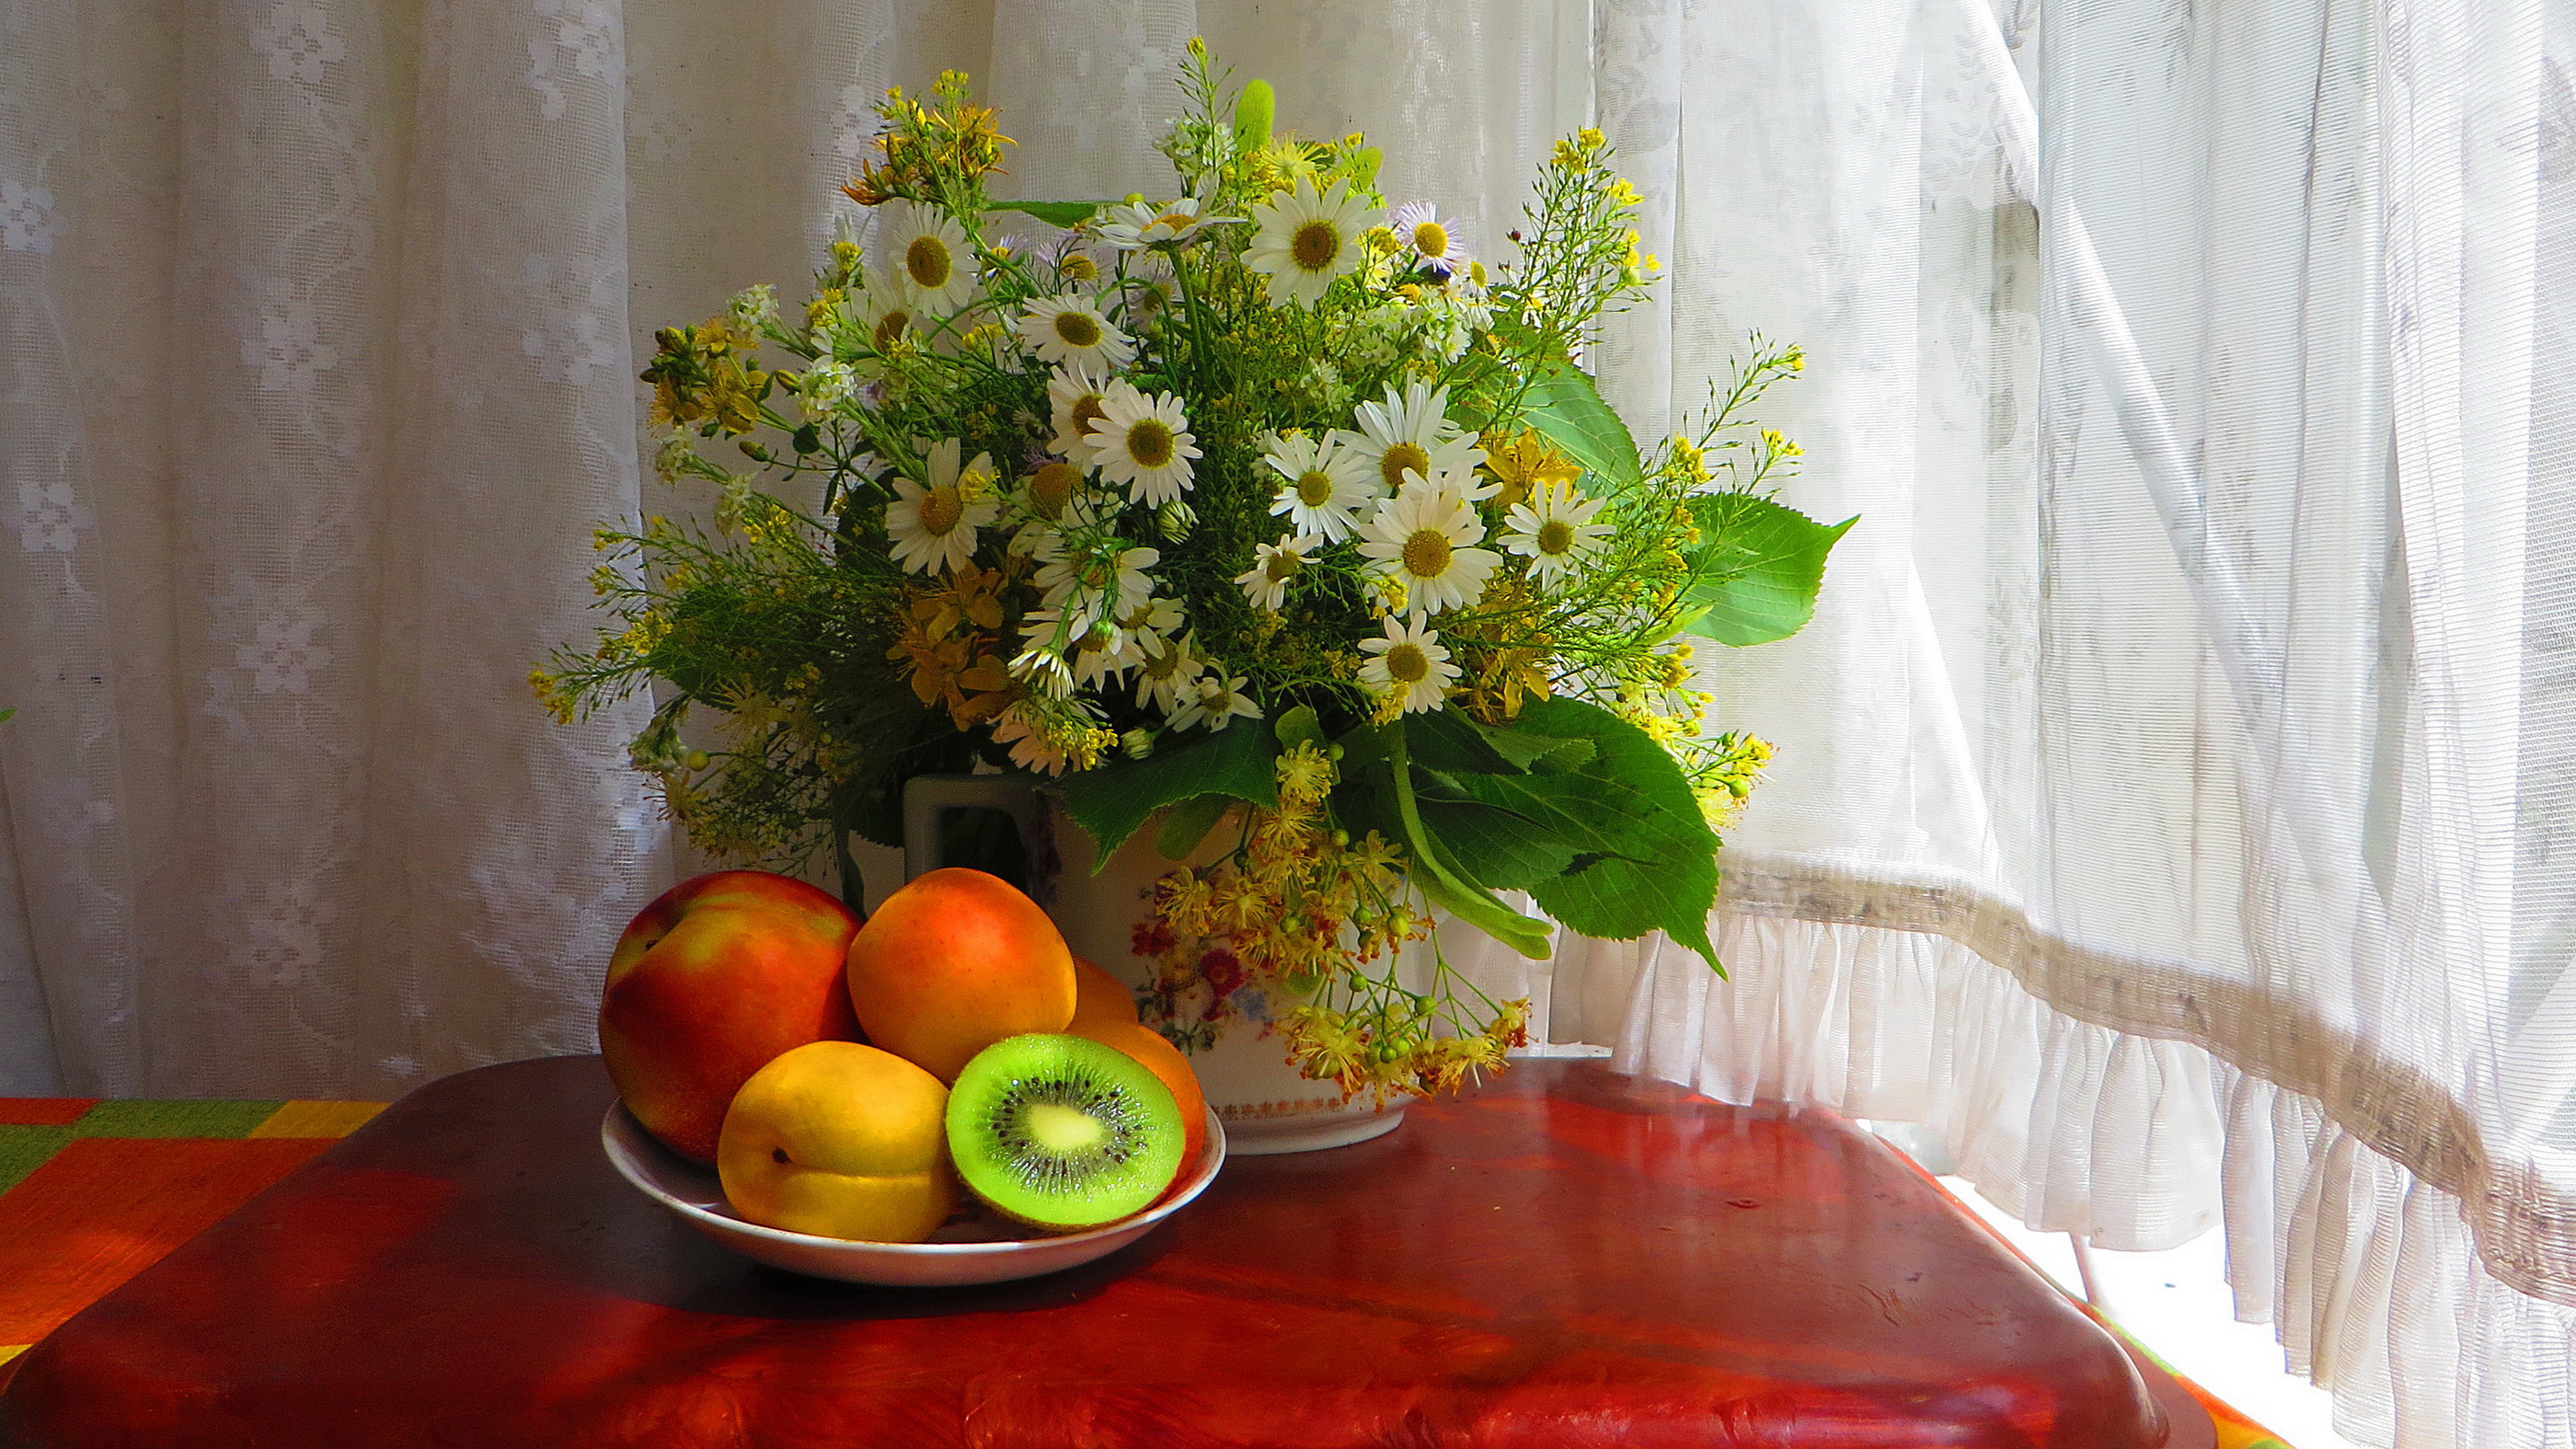 photography, still life, bowl, curtain, daisy, flower, fruit, vase Desktop home screen Wallpaper